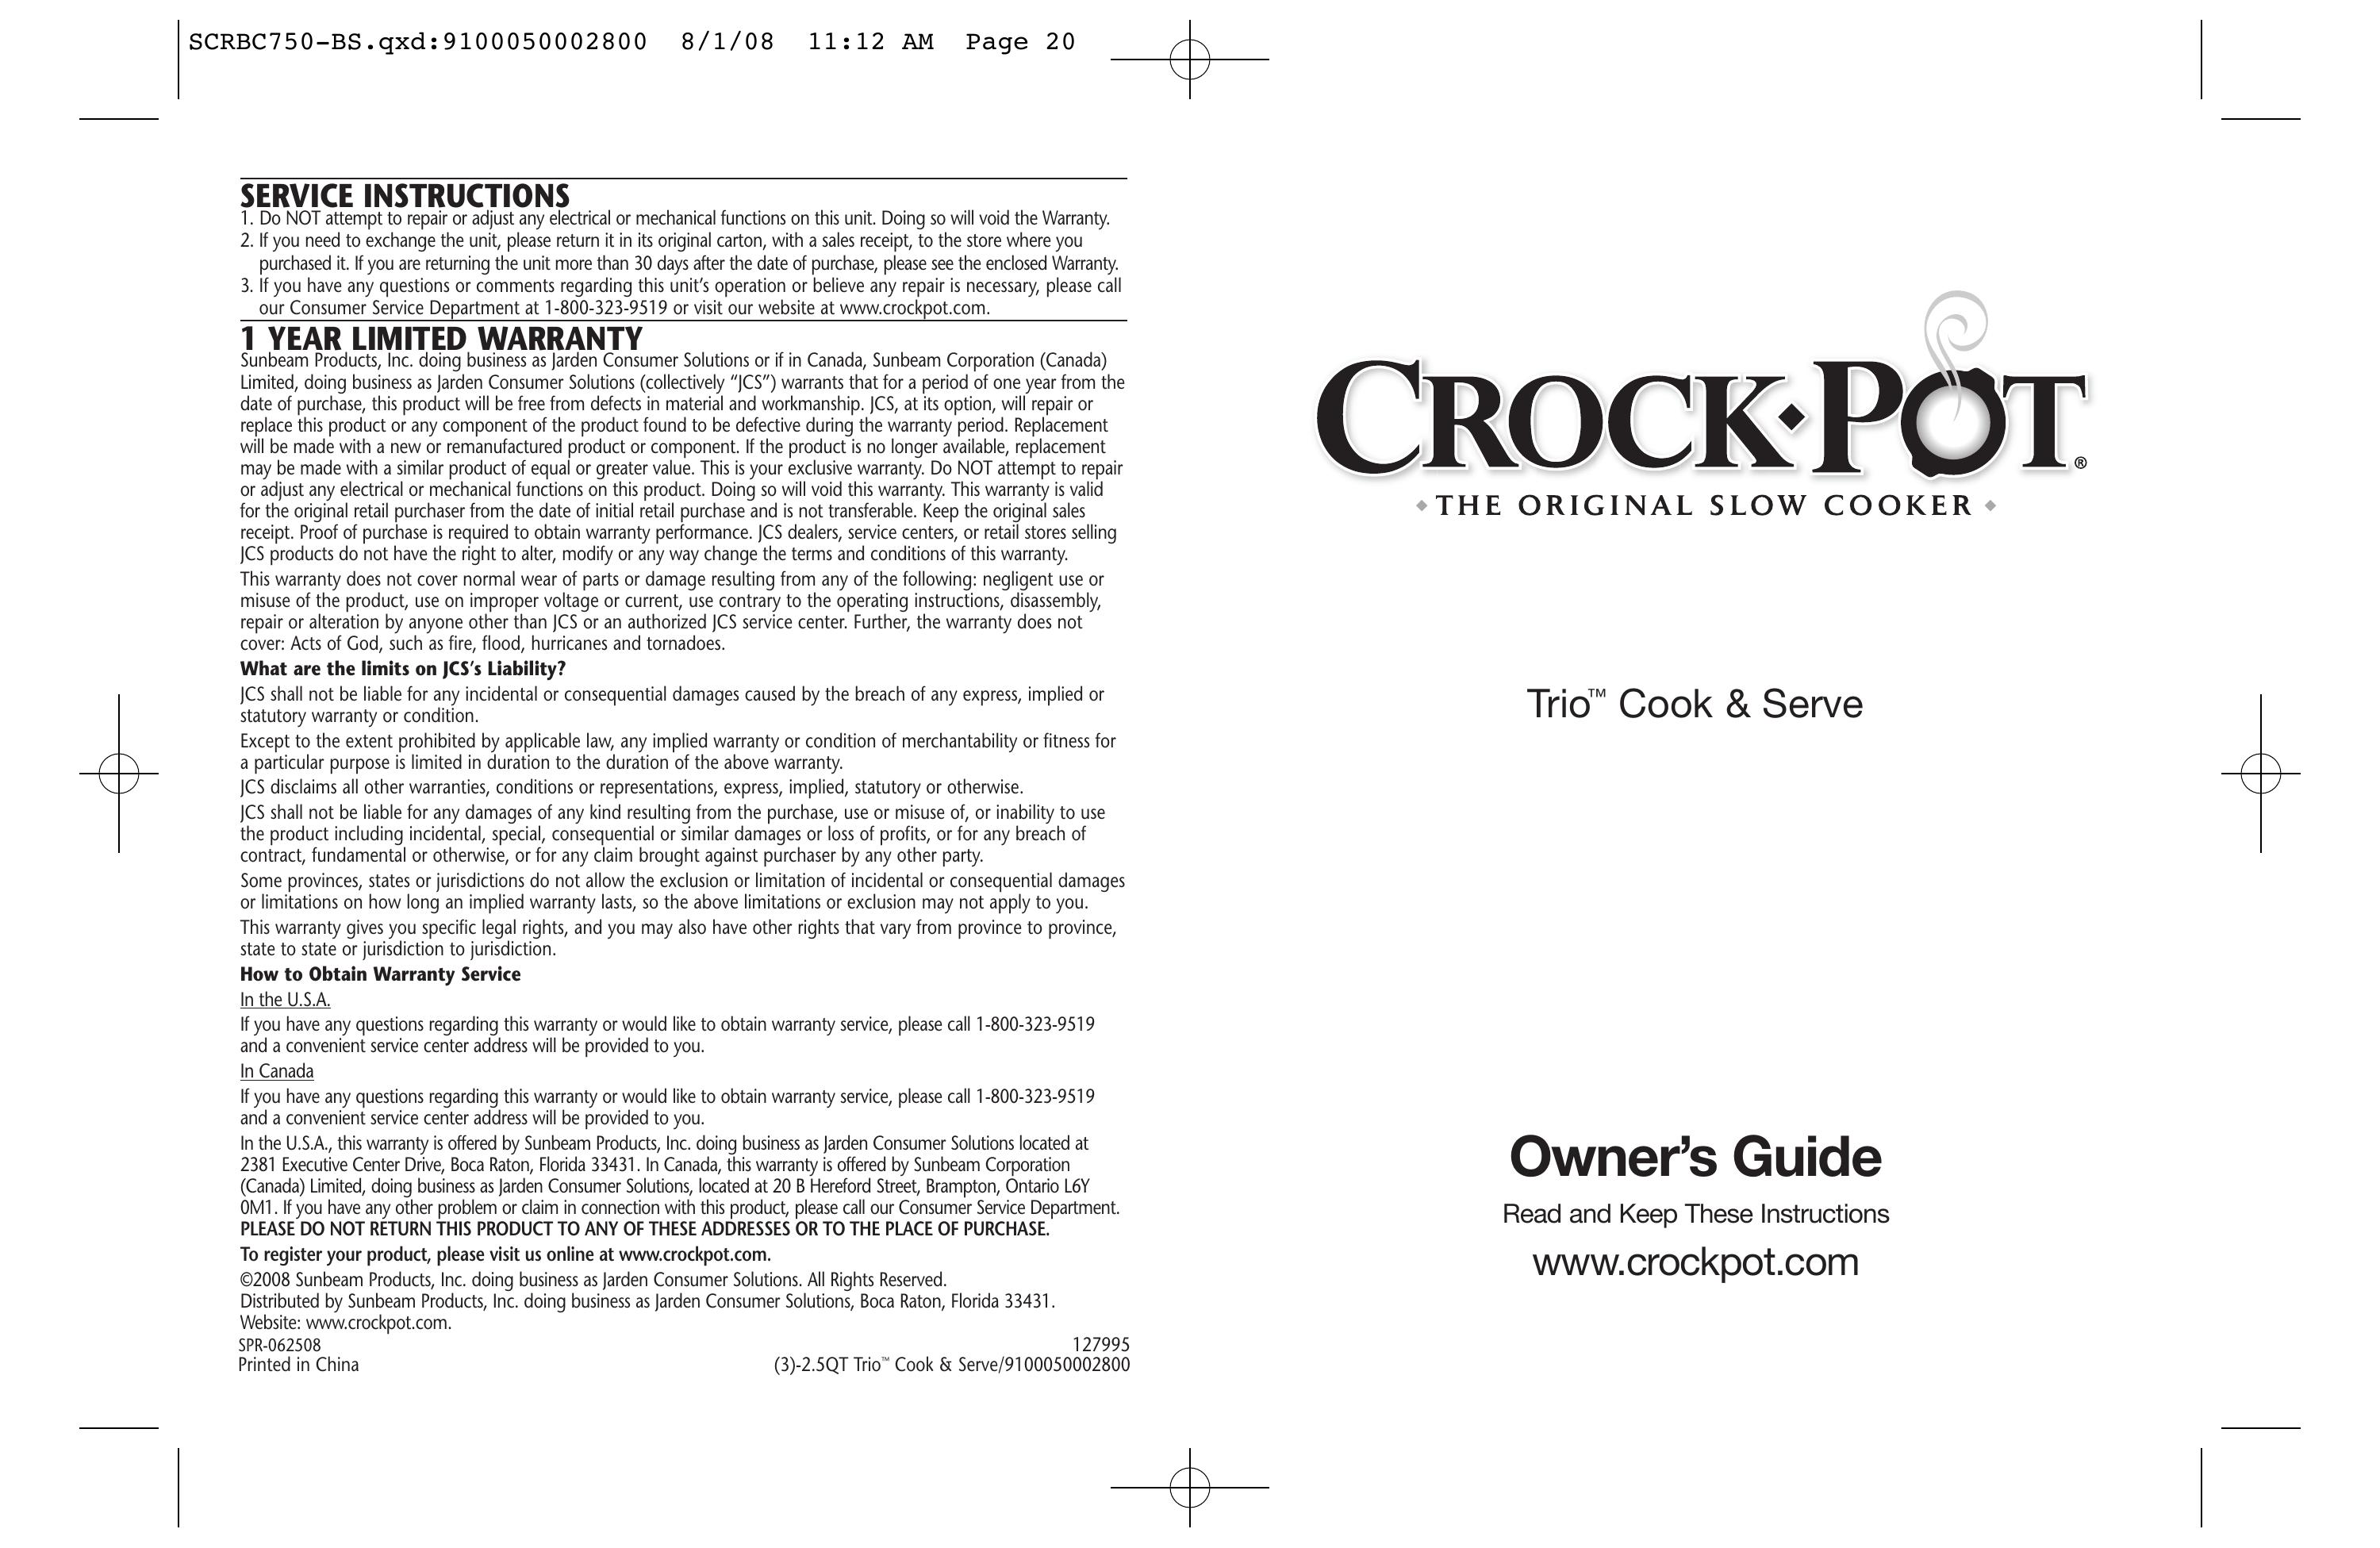 Crock-Pot Trio Slow Cooker User Manual